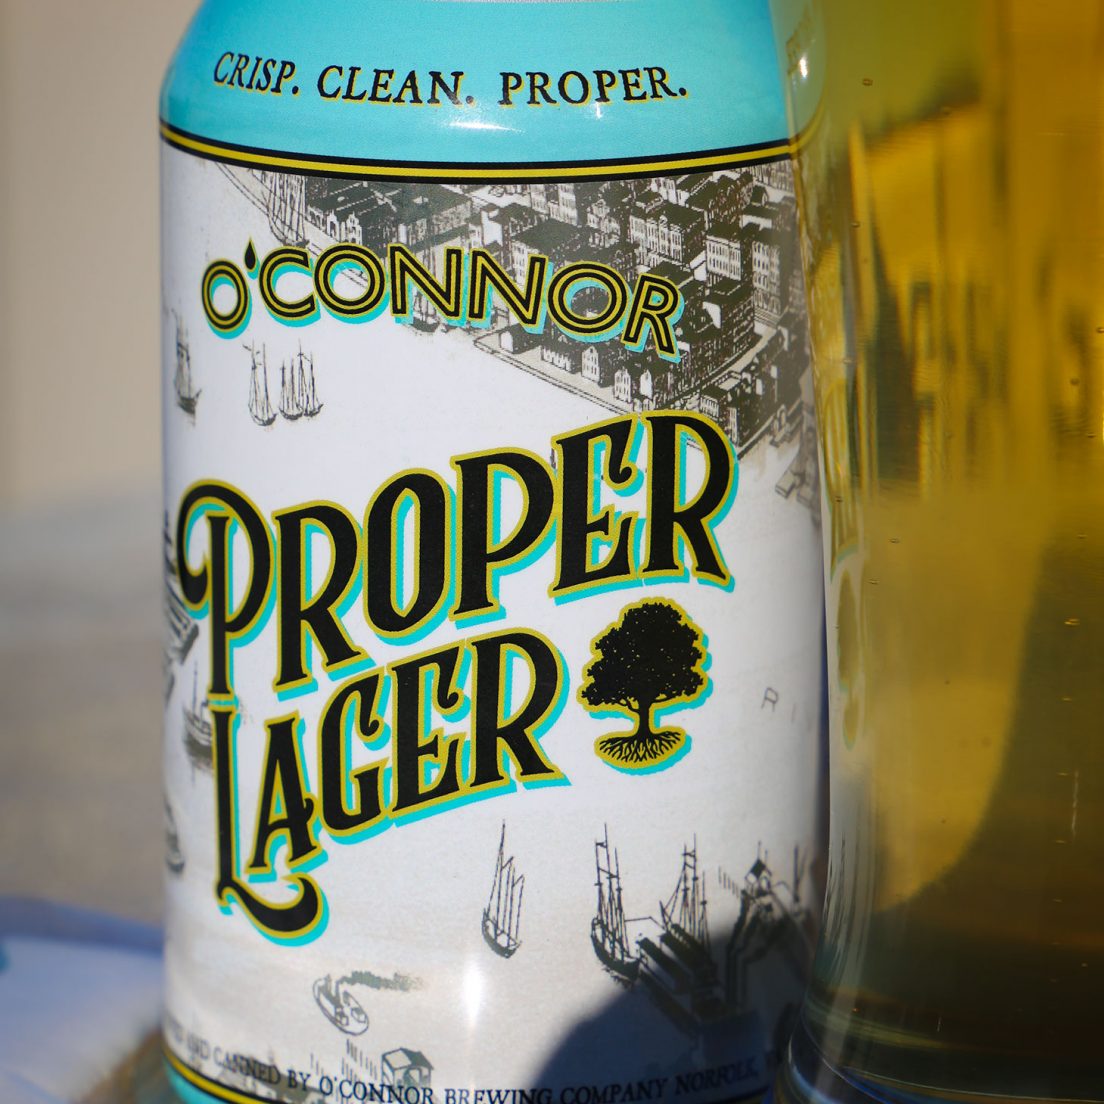 O'Connor Proper Lager